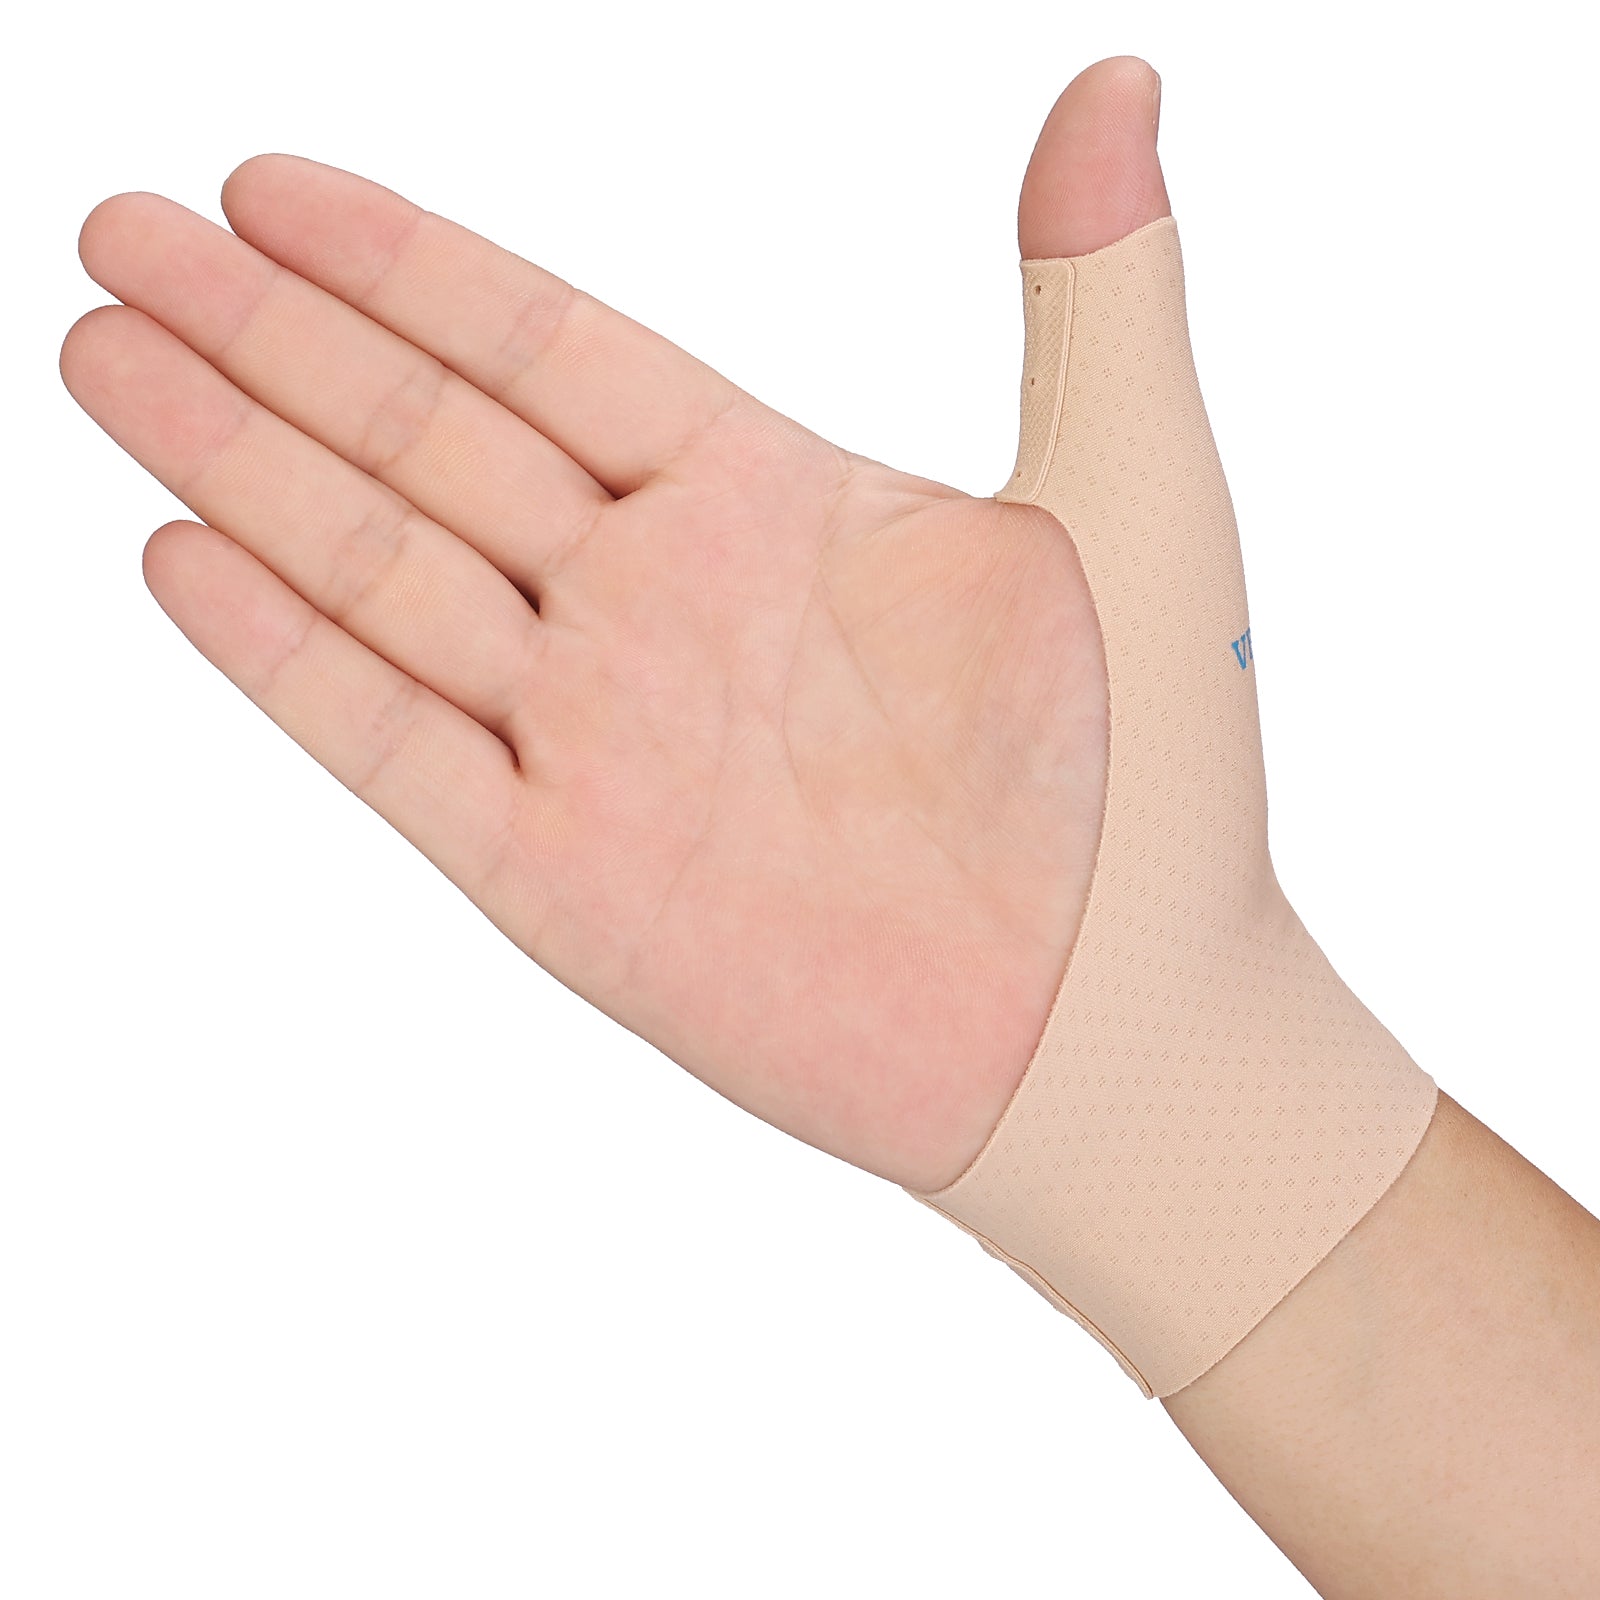 VELPEAU Wrist Brace with Thumb Spica Splint Support Left Hand Size Medium -  Helia Beer Co